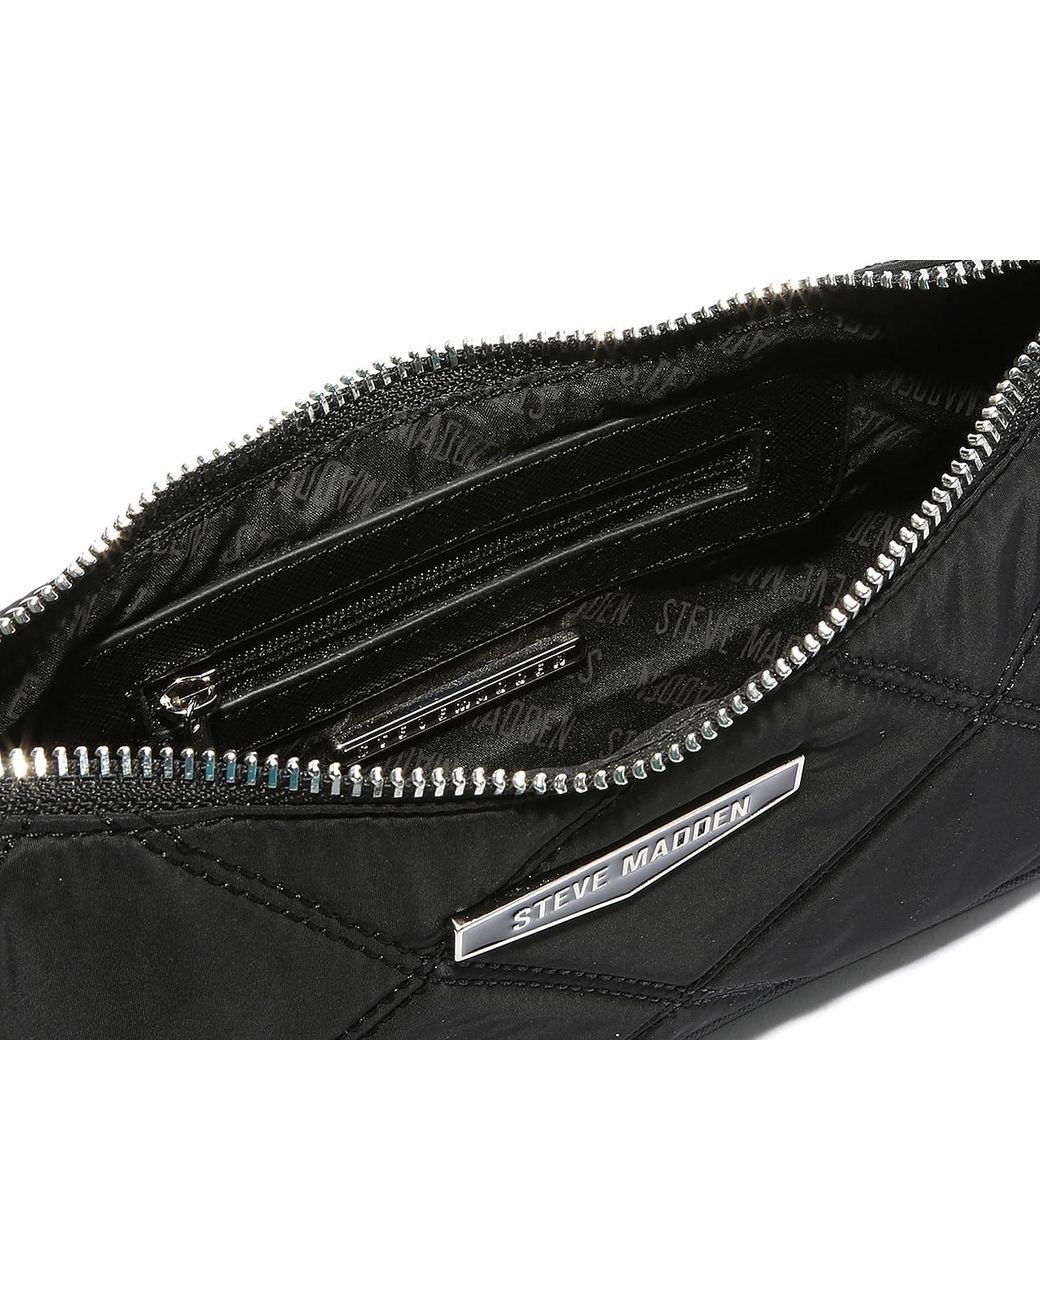 Steve Madden Synthetic Bvetta Crossbody Bag in Black | Lyst